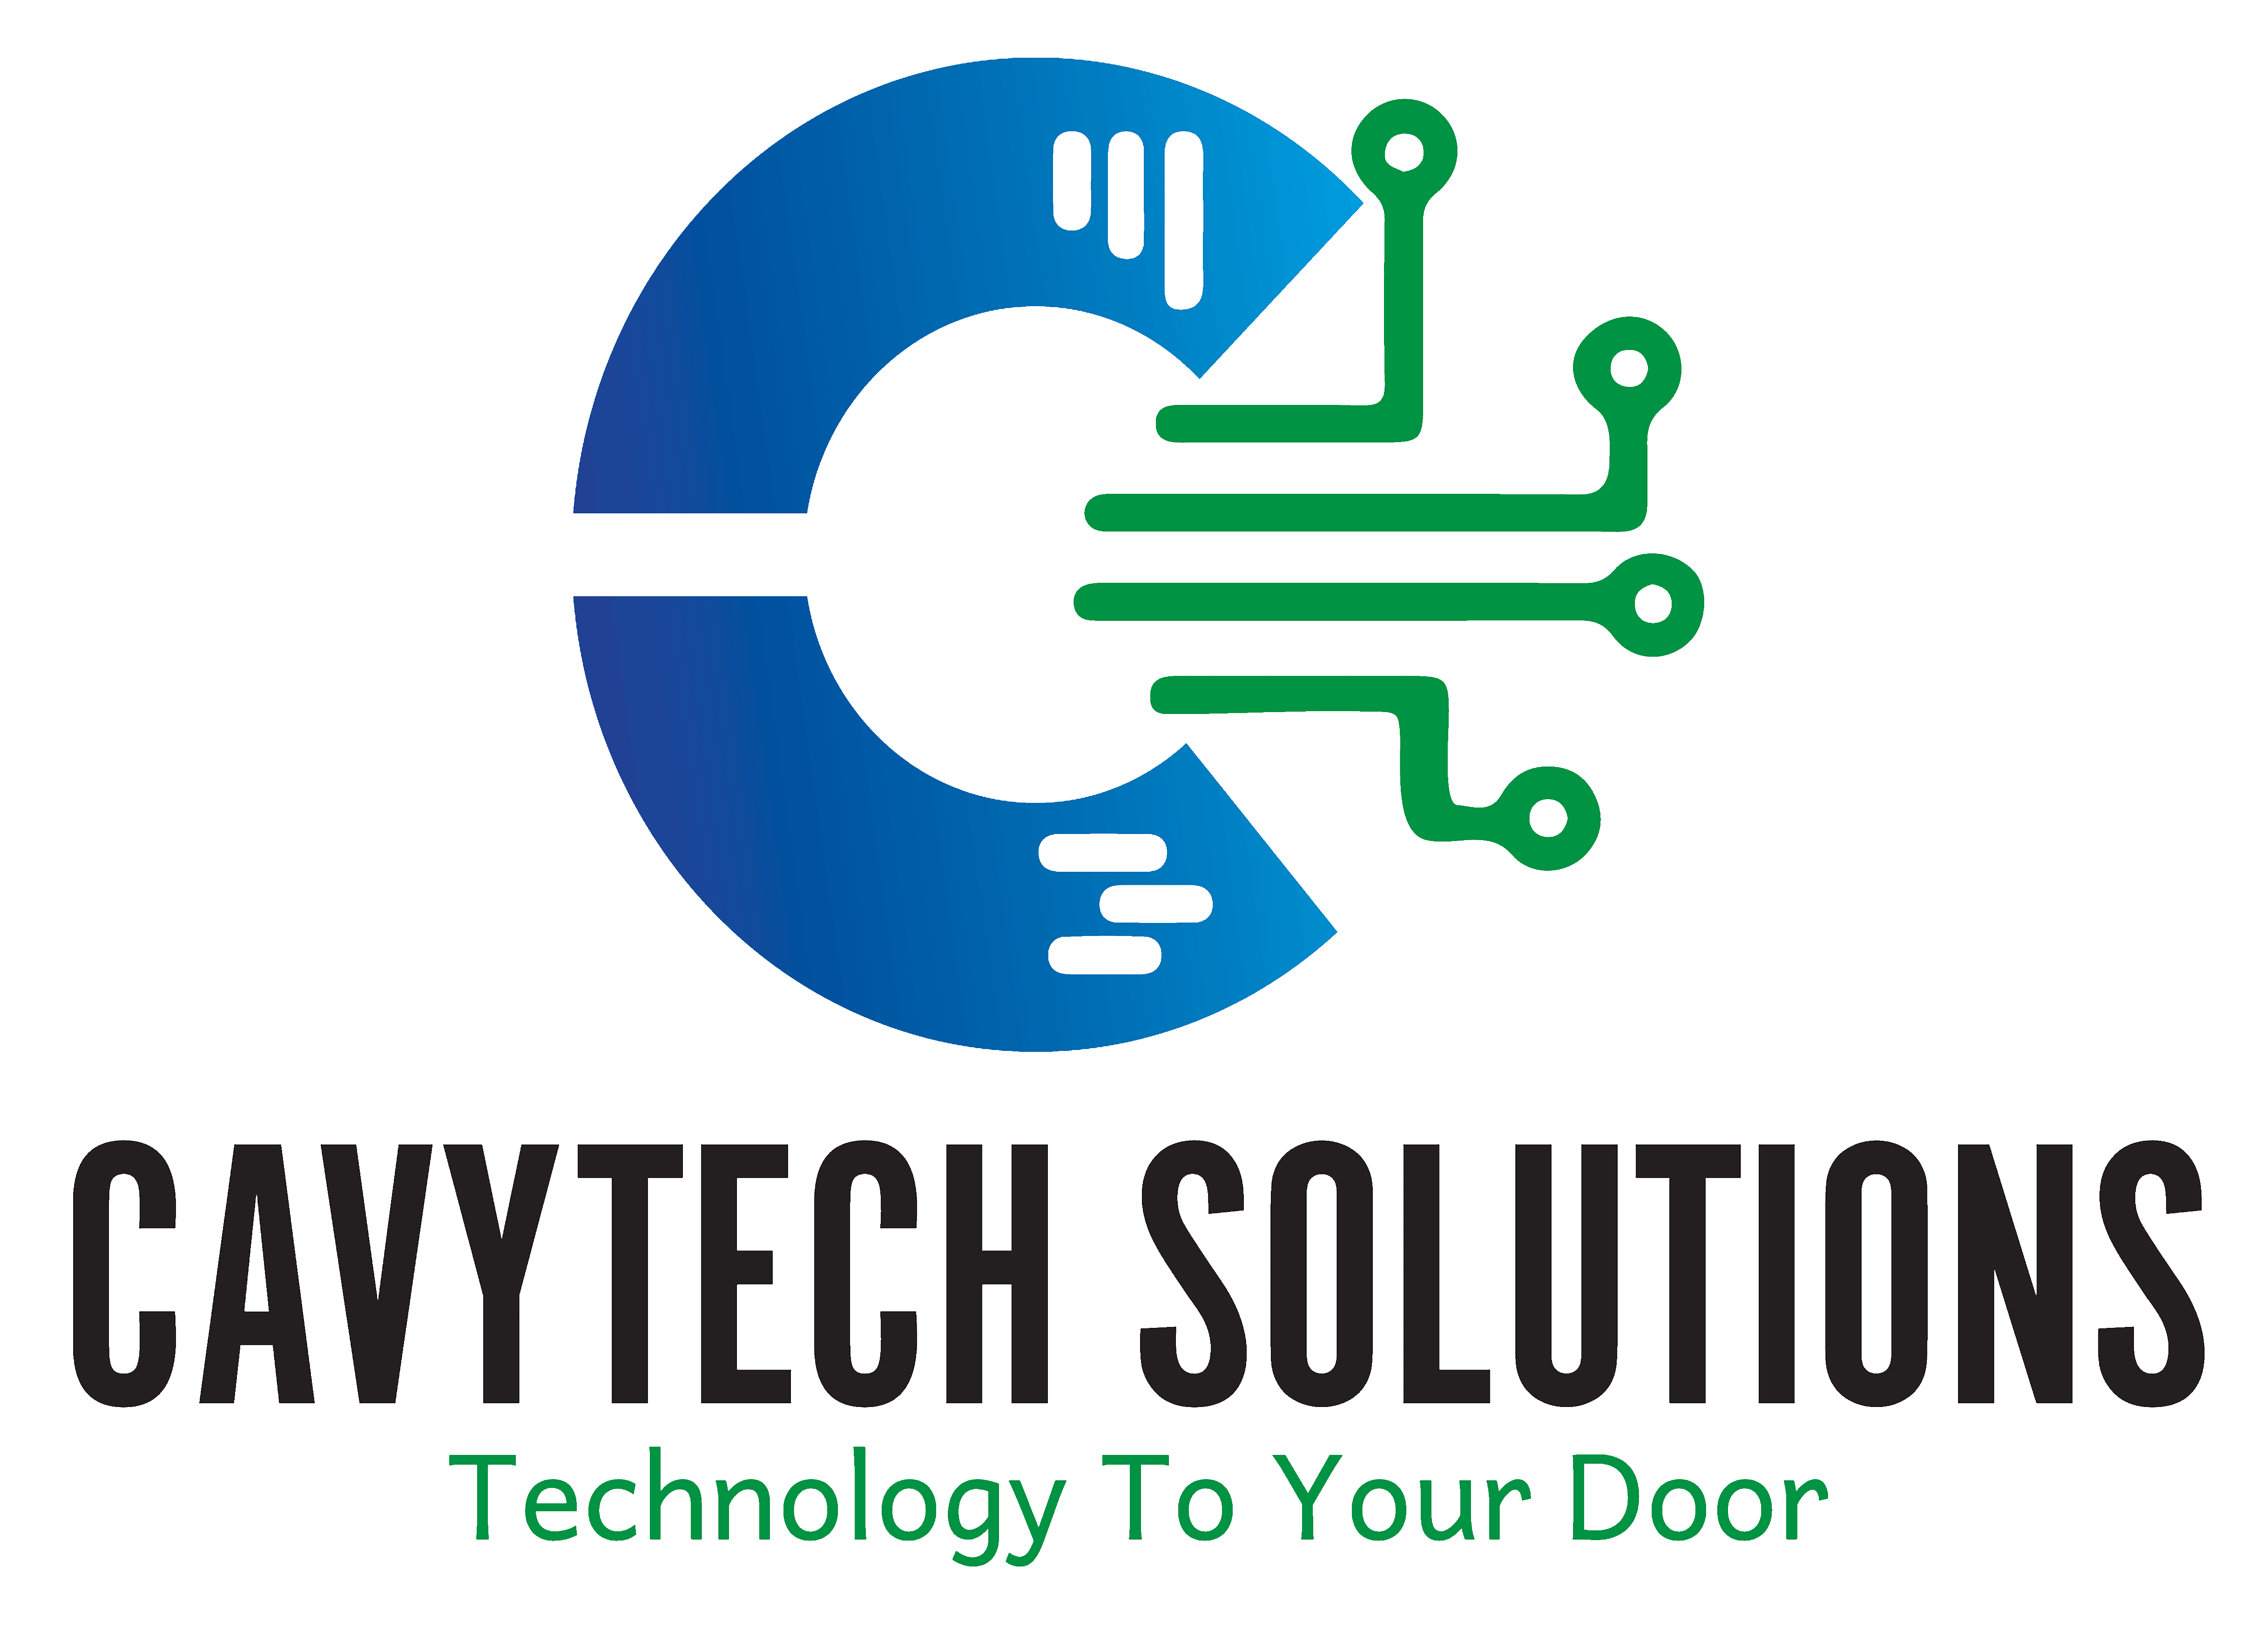 cavytech solutions